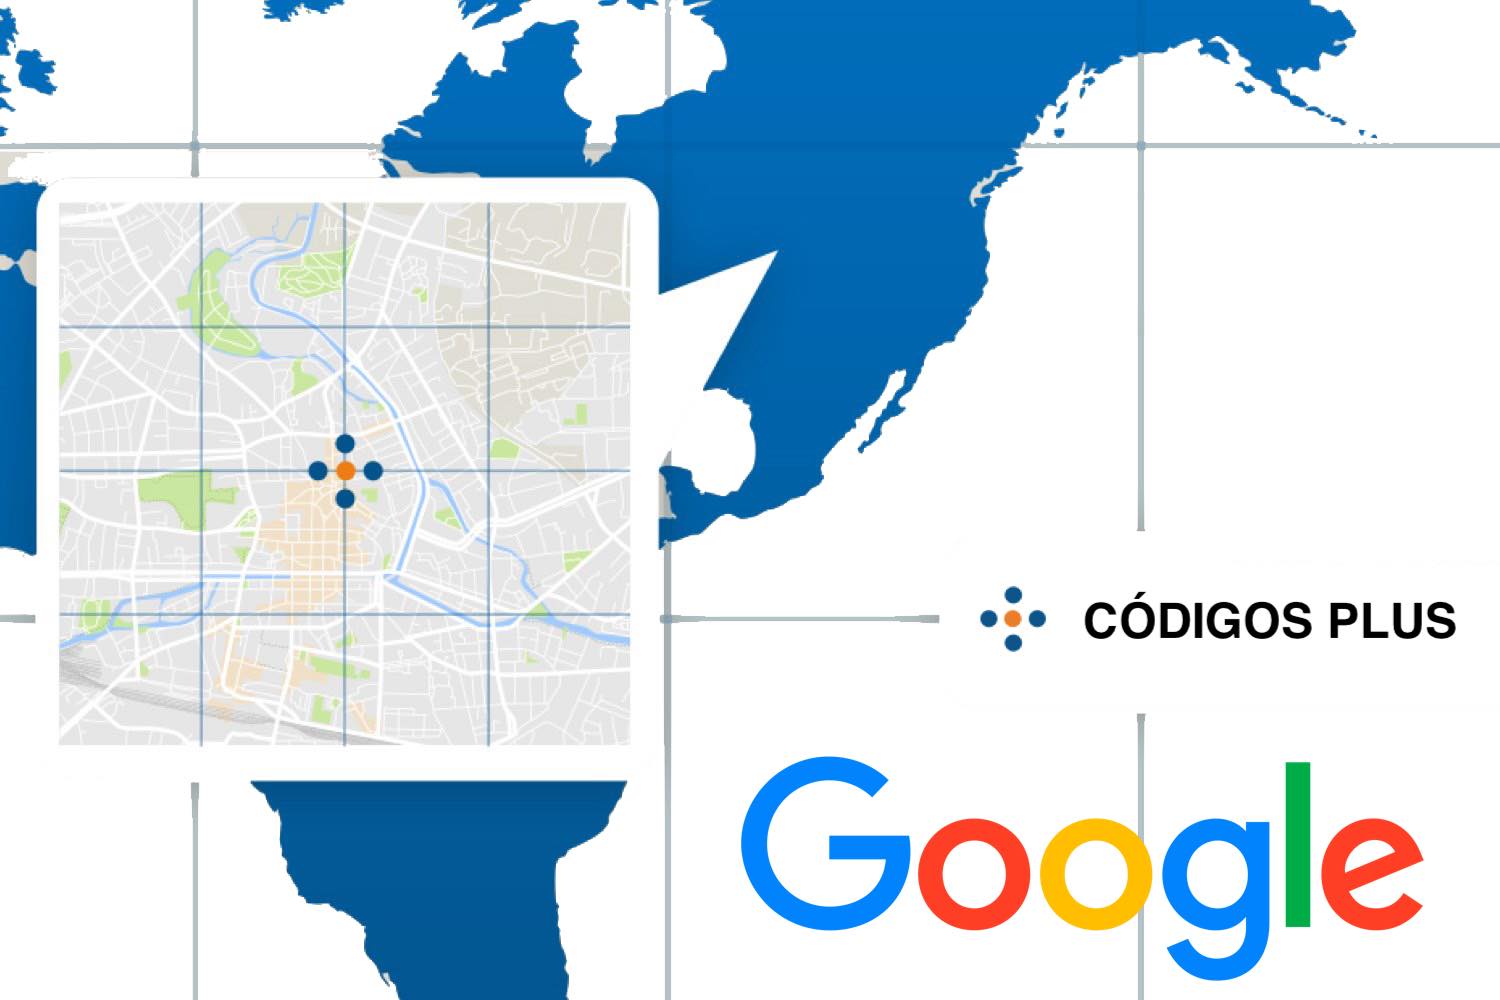 codigos plus, plus codes google maps